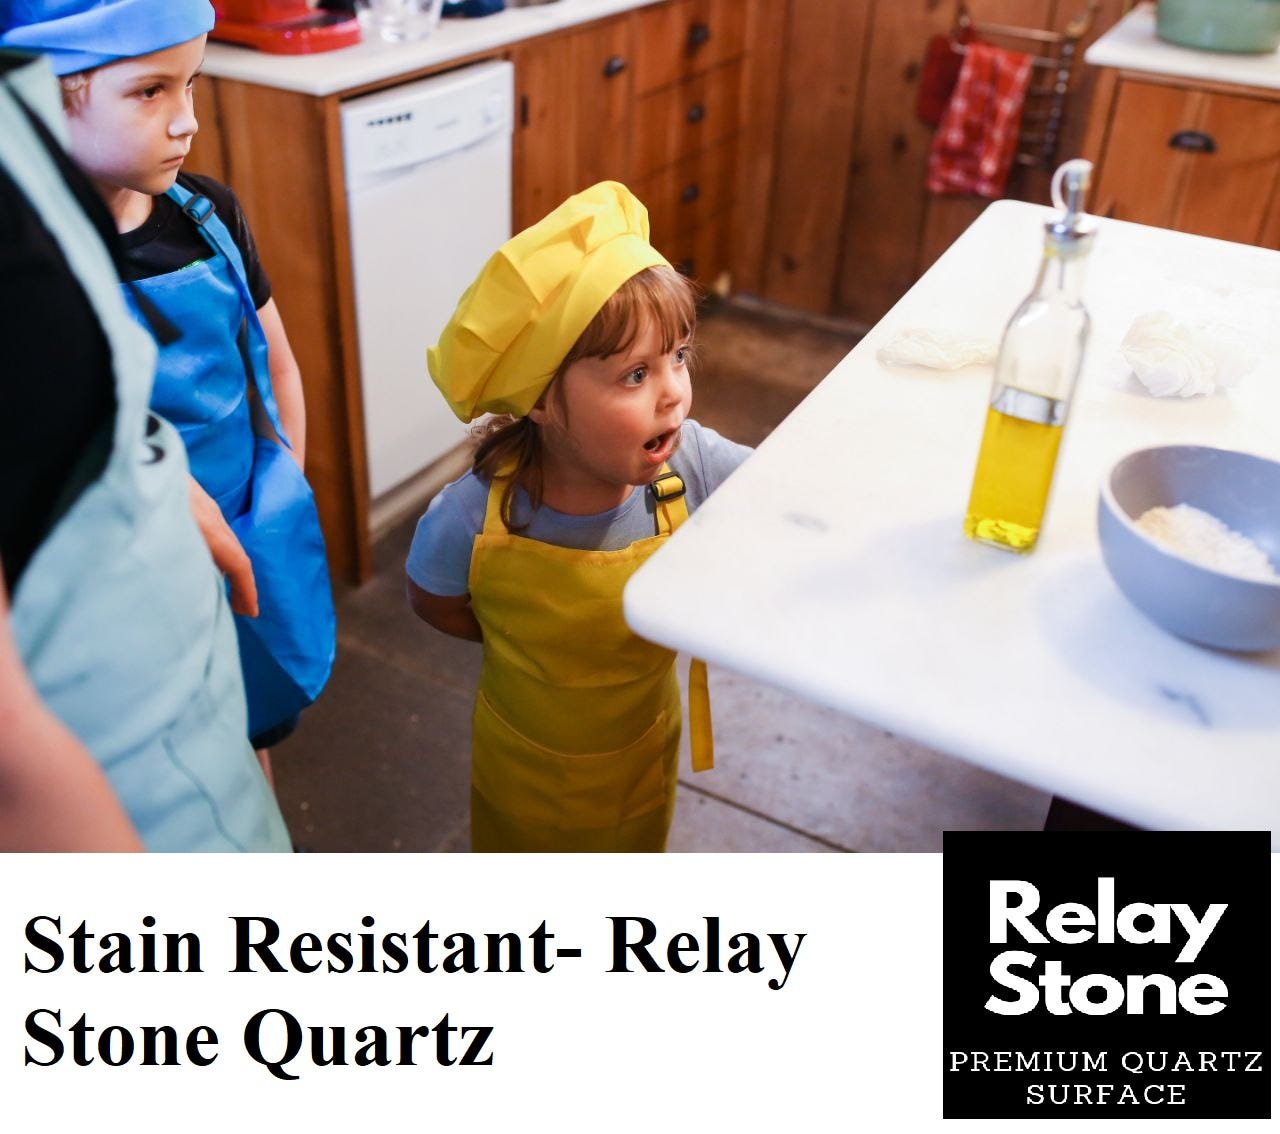 Are Quartz Countertops Stain Resistant?